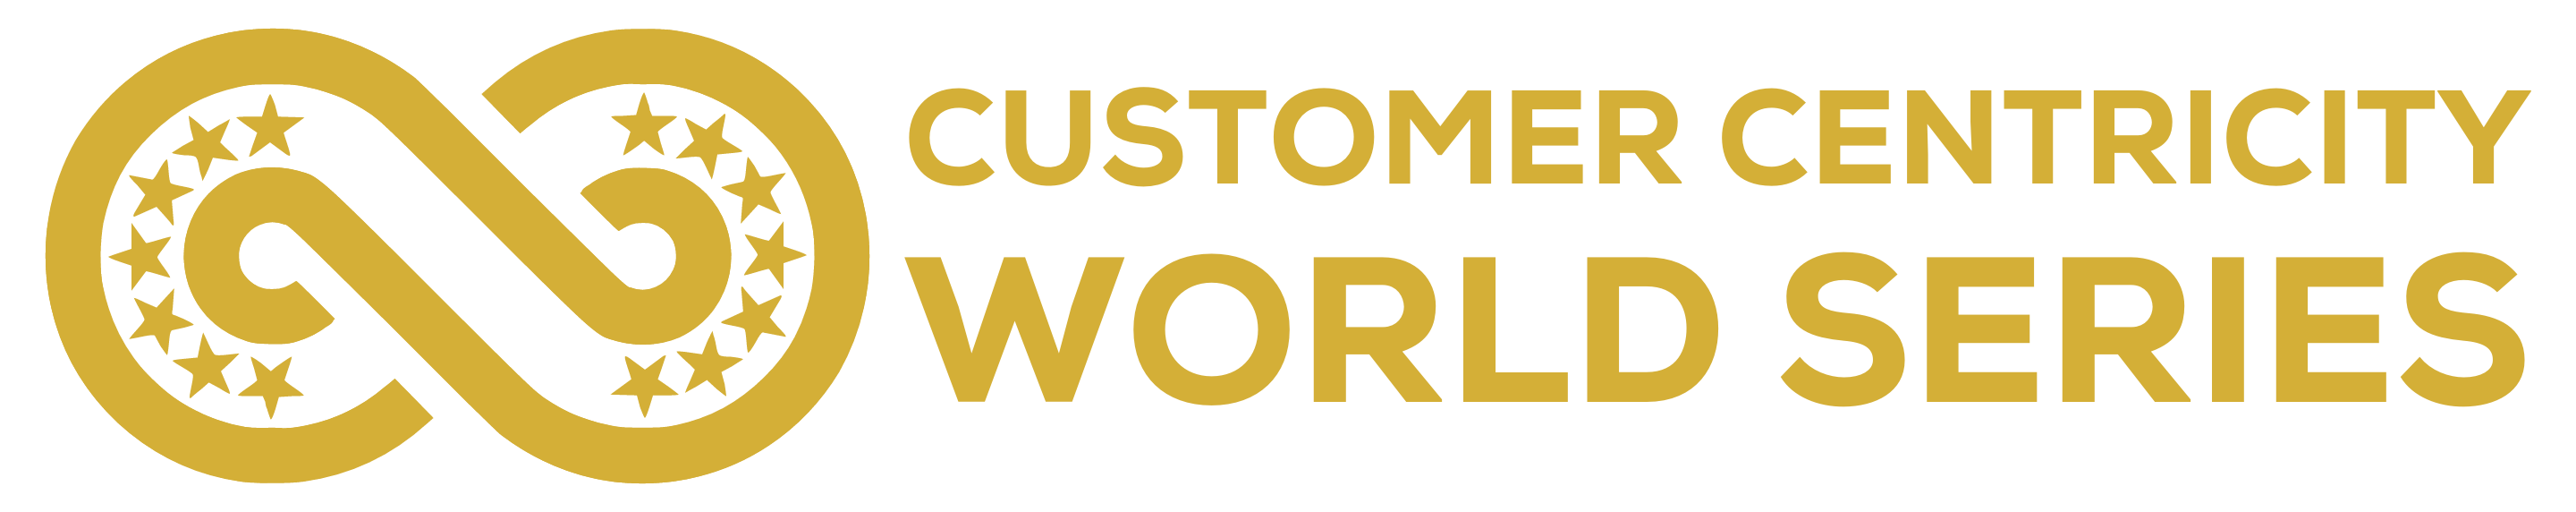 CC-World-Series-Logo